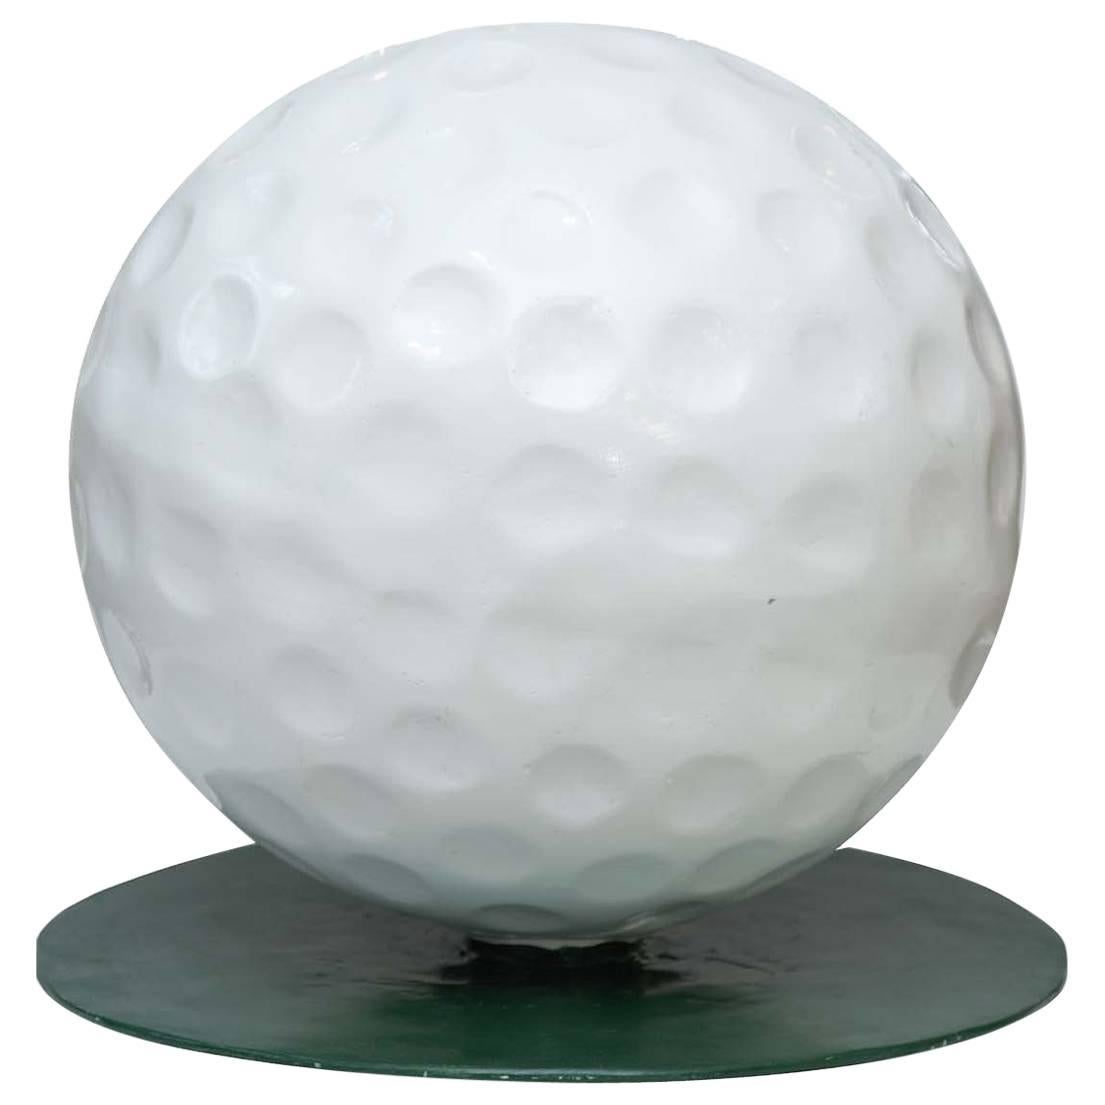 Giant Decorative Golf Ball